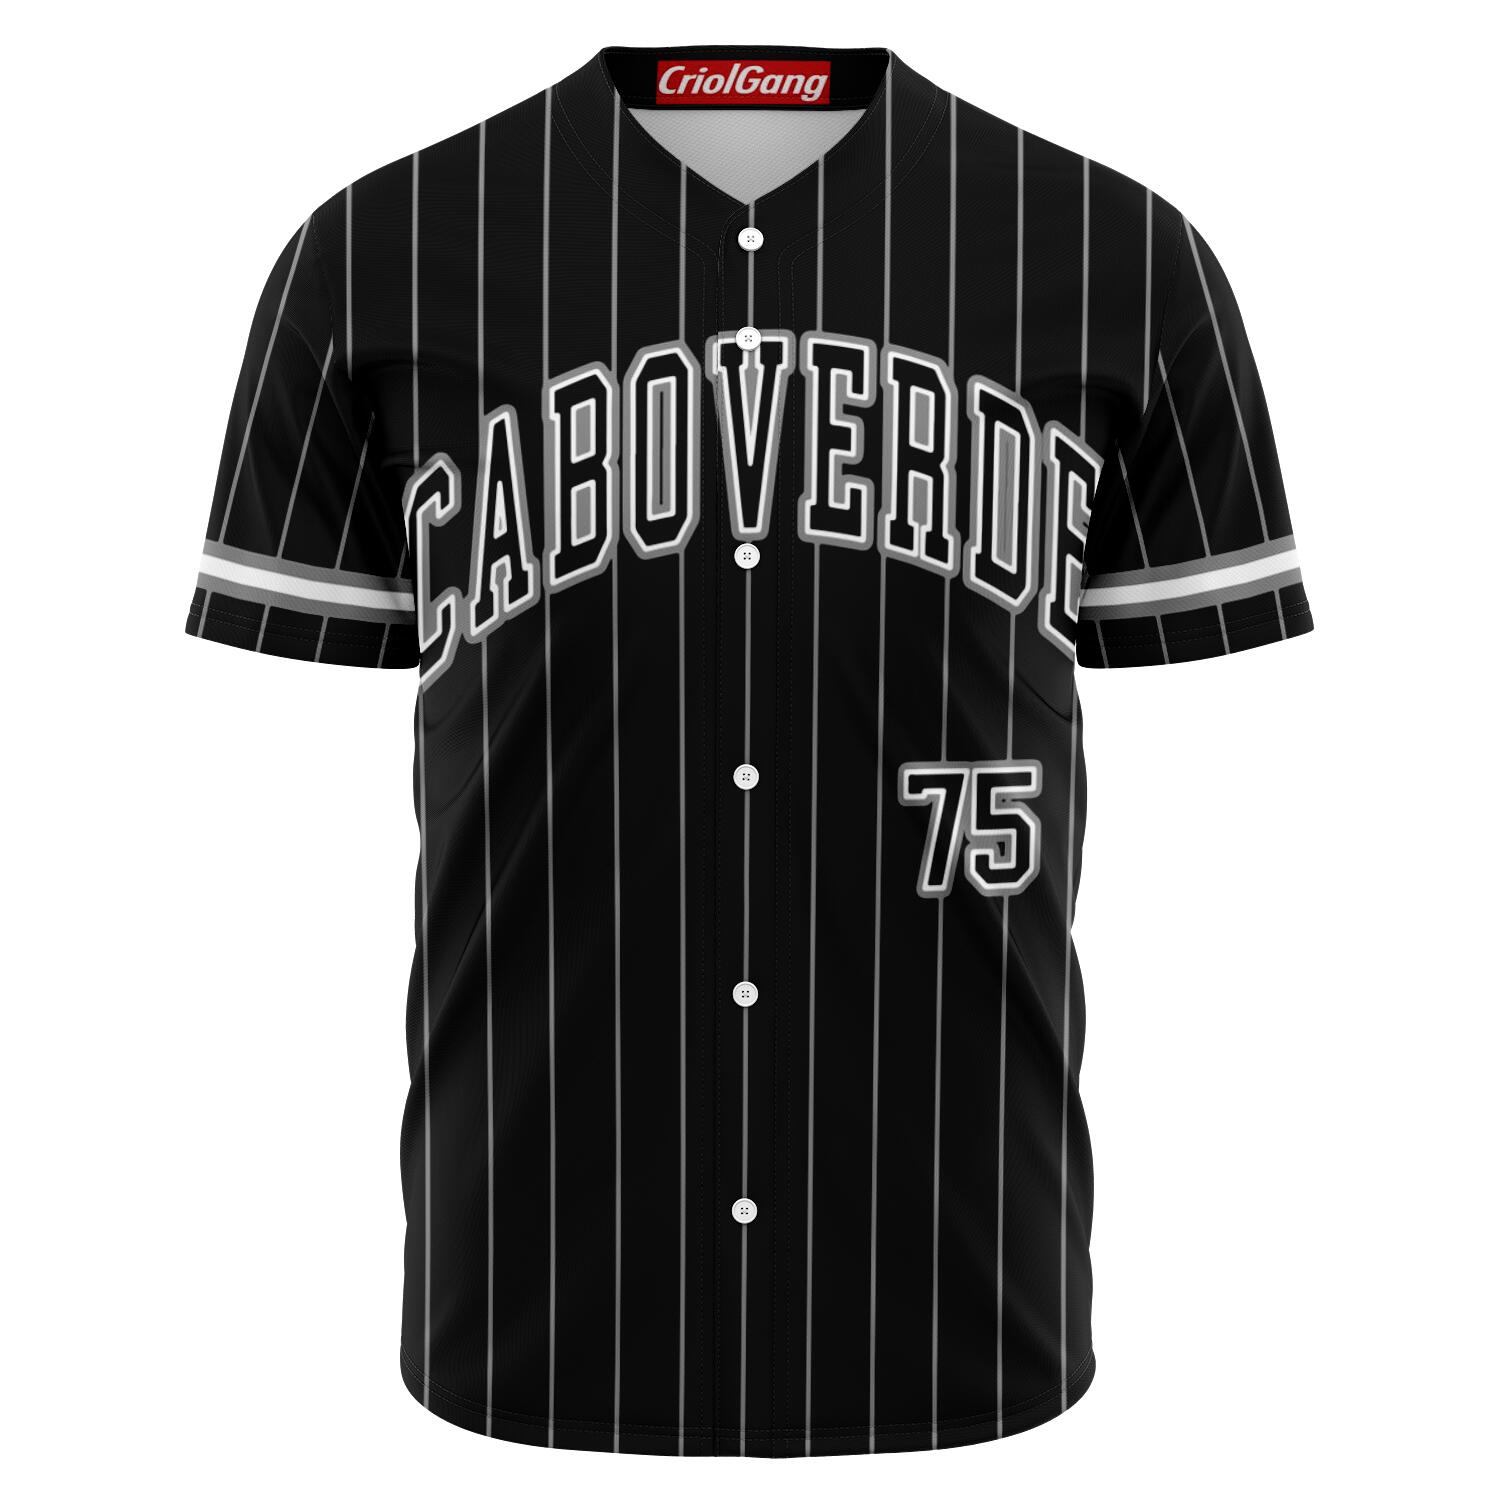 Cabo Verde baseball jersey black & grey " CABOGANG" - CVC Streetwear